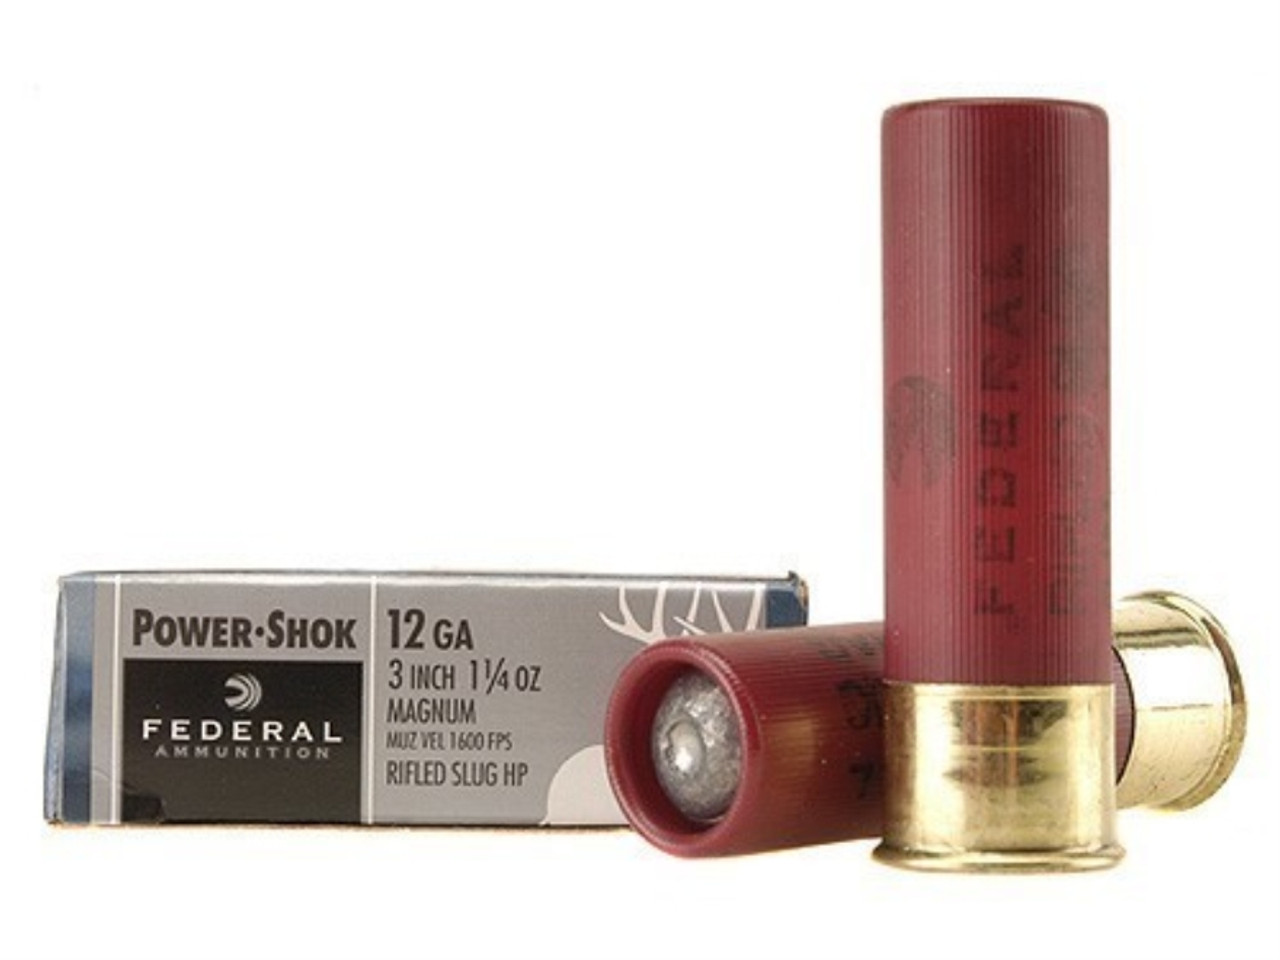 Federal Power-Shok 12ga 3" 1 1/4" Rifle Slug, Box of 5